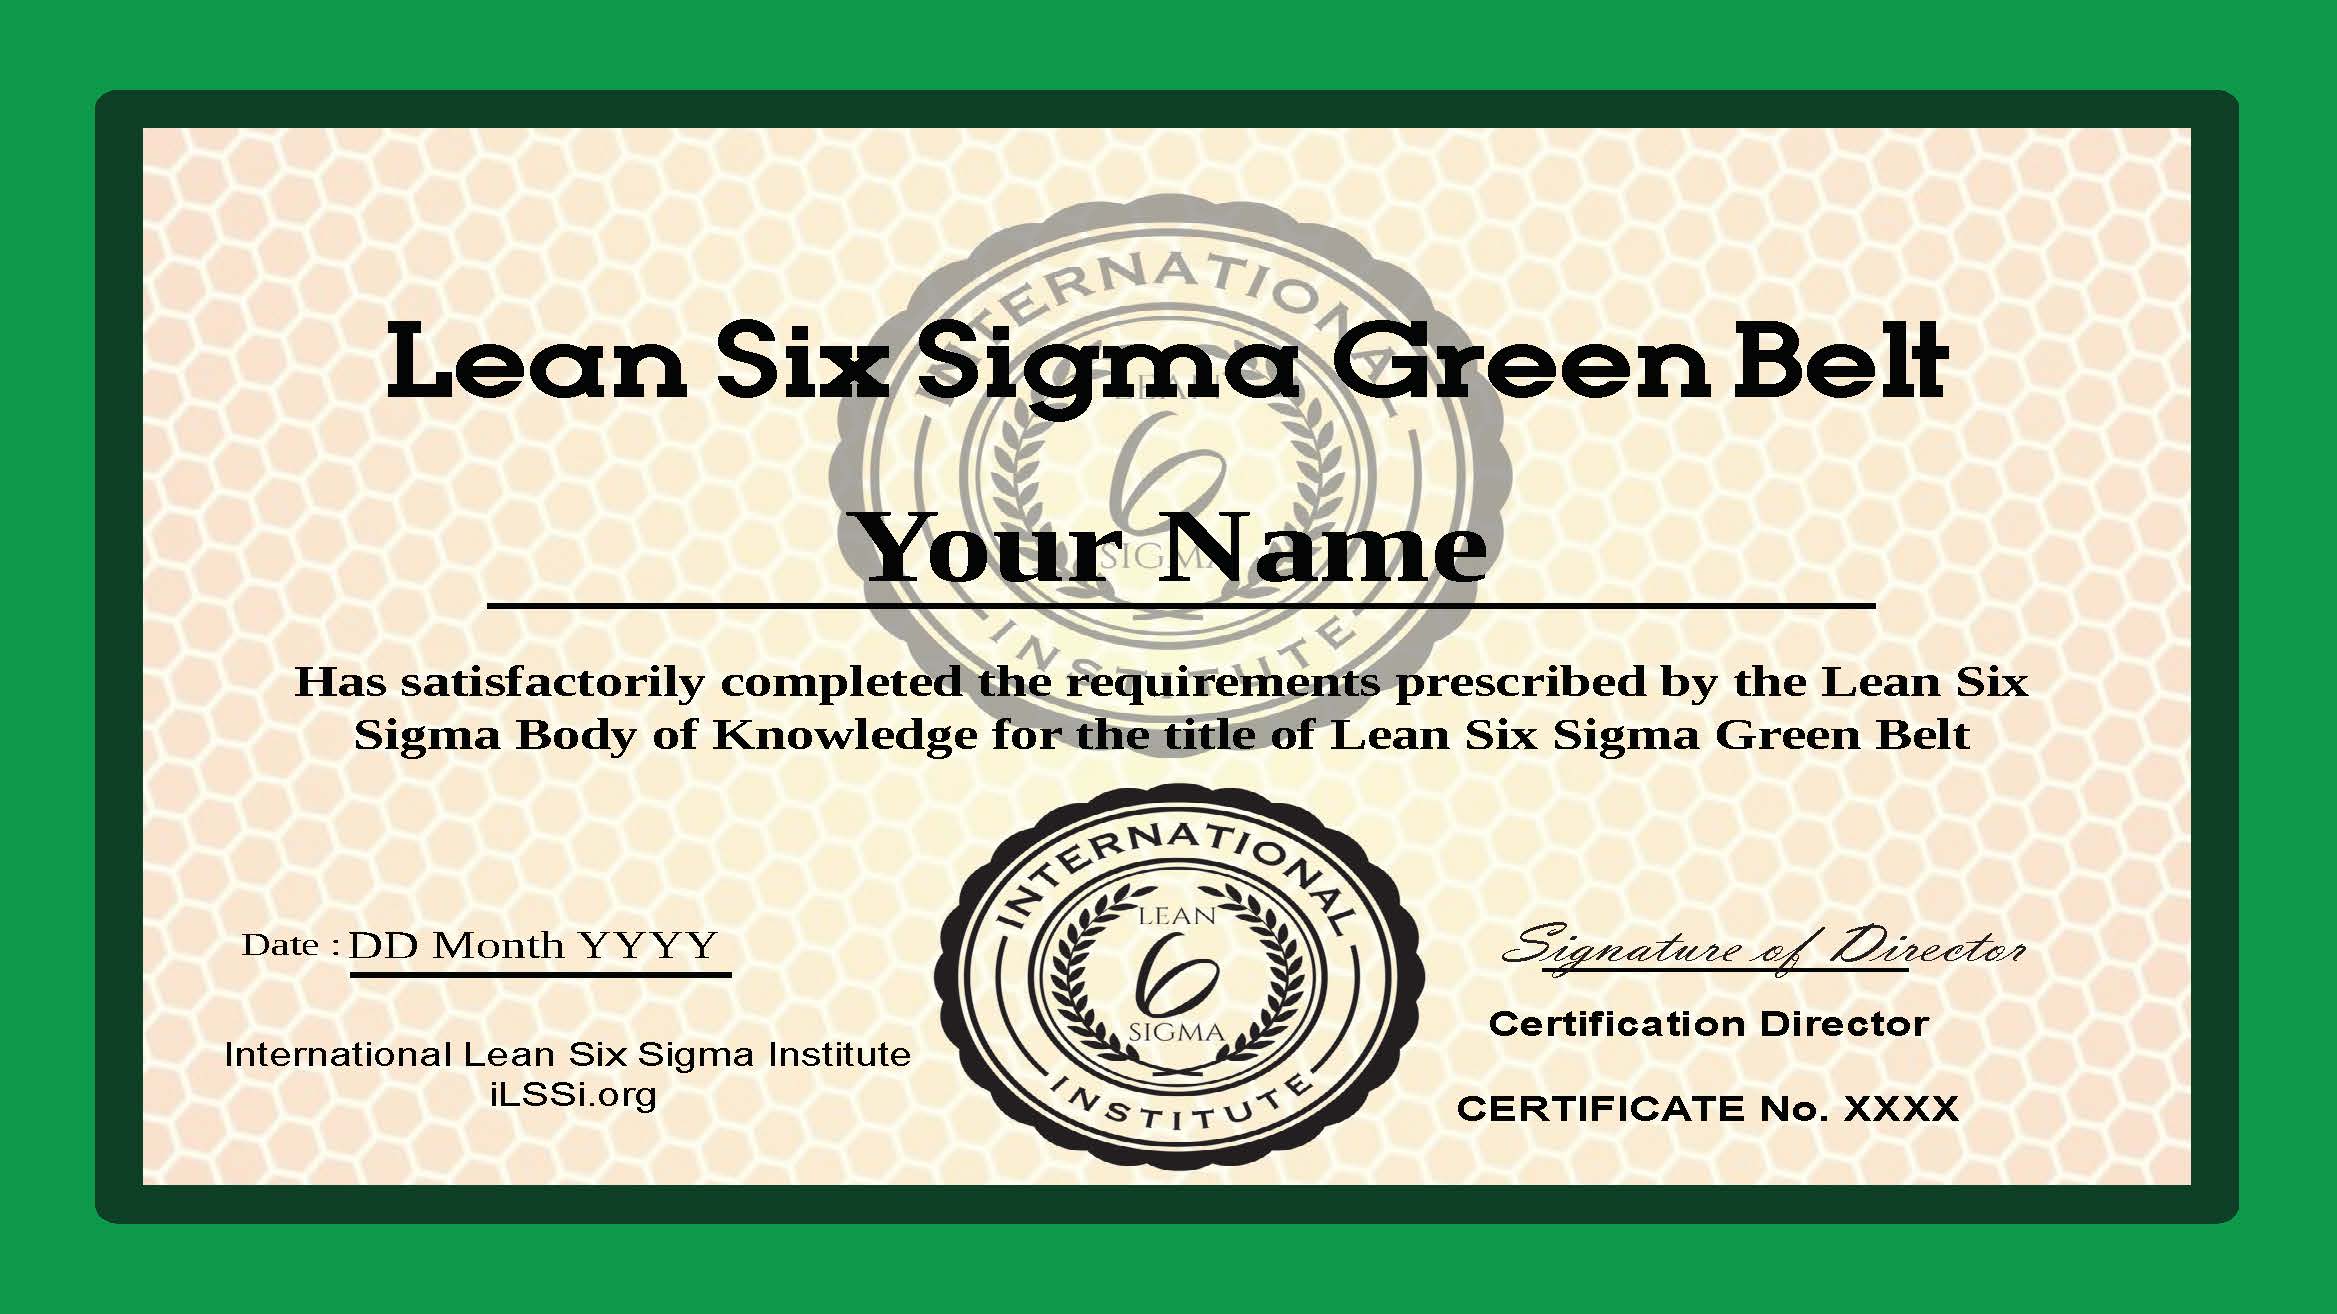 Ilssi Green Belt Oct 2019 Template International Lean Six Sigma Institute